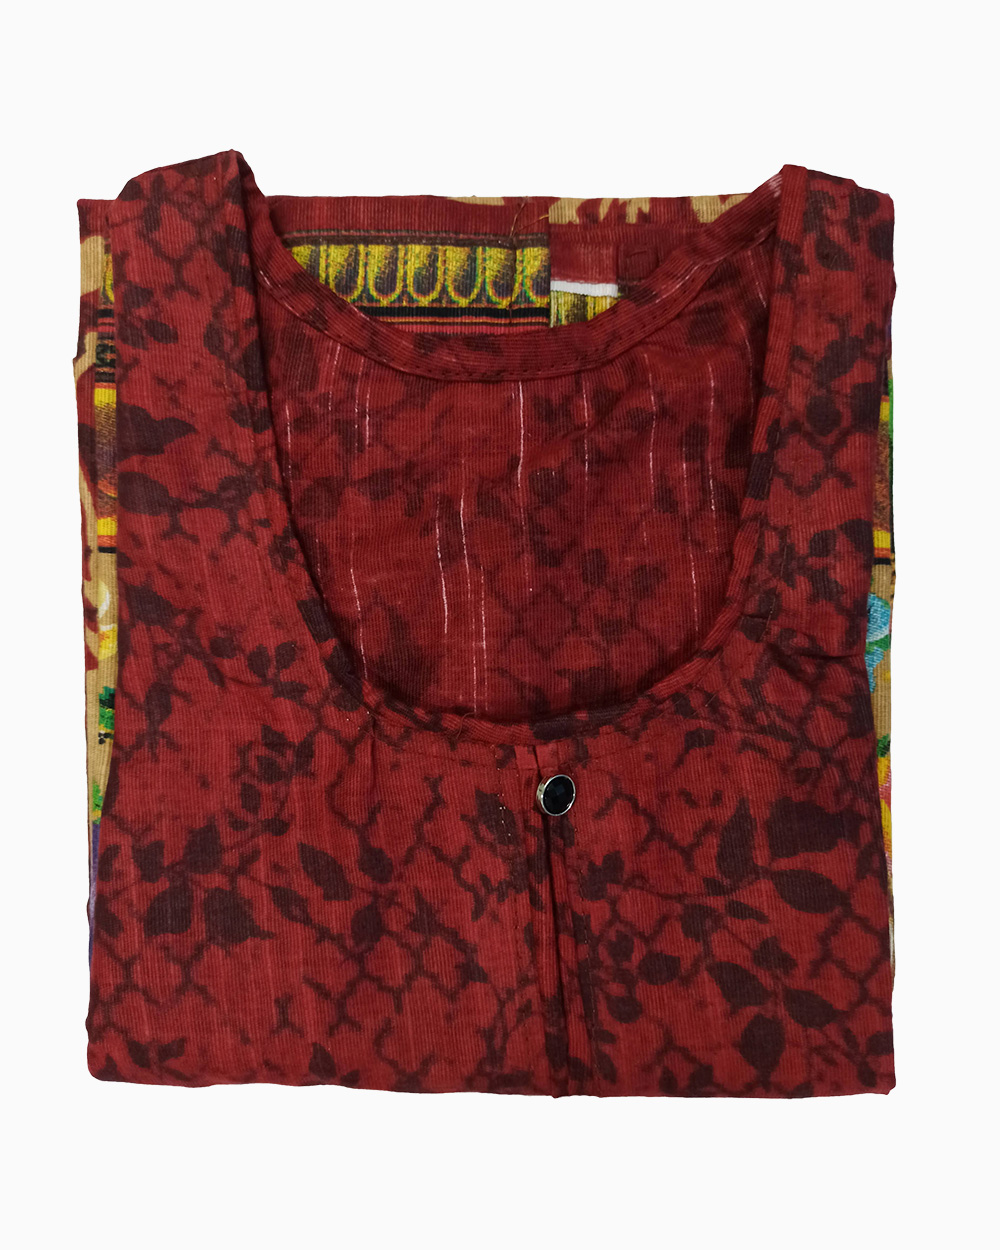 khaddar shirts-latest winter designer collection-floral printed khaddar-multi color khaddar shirt designs (7)